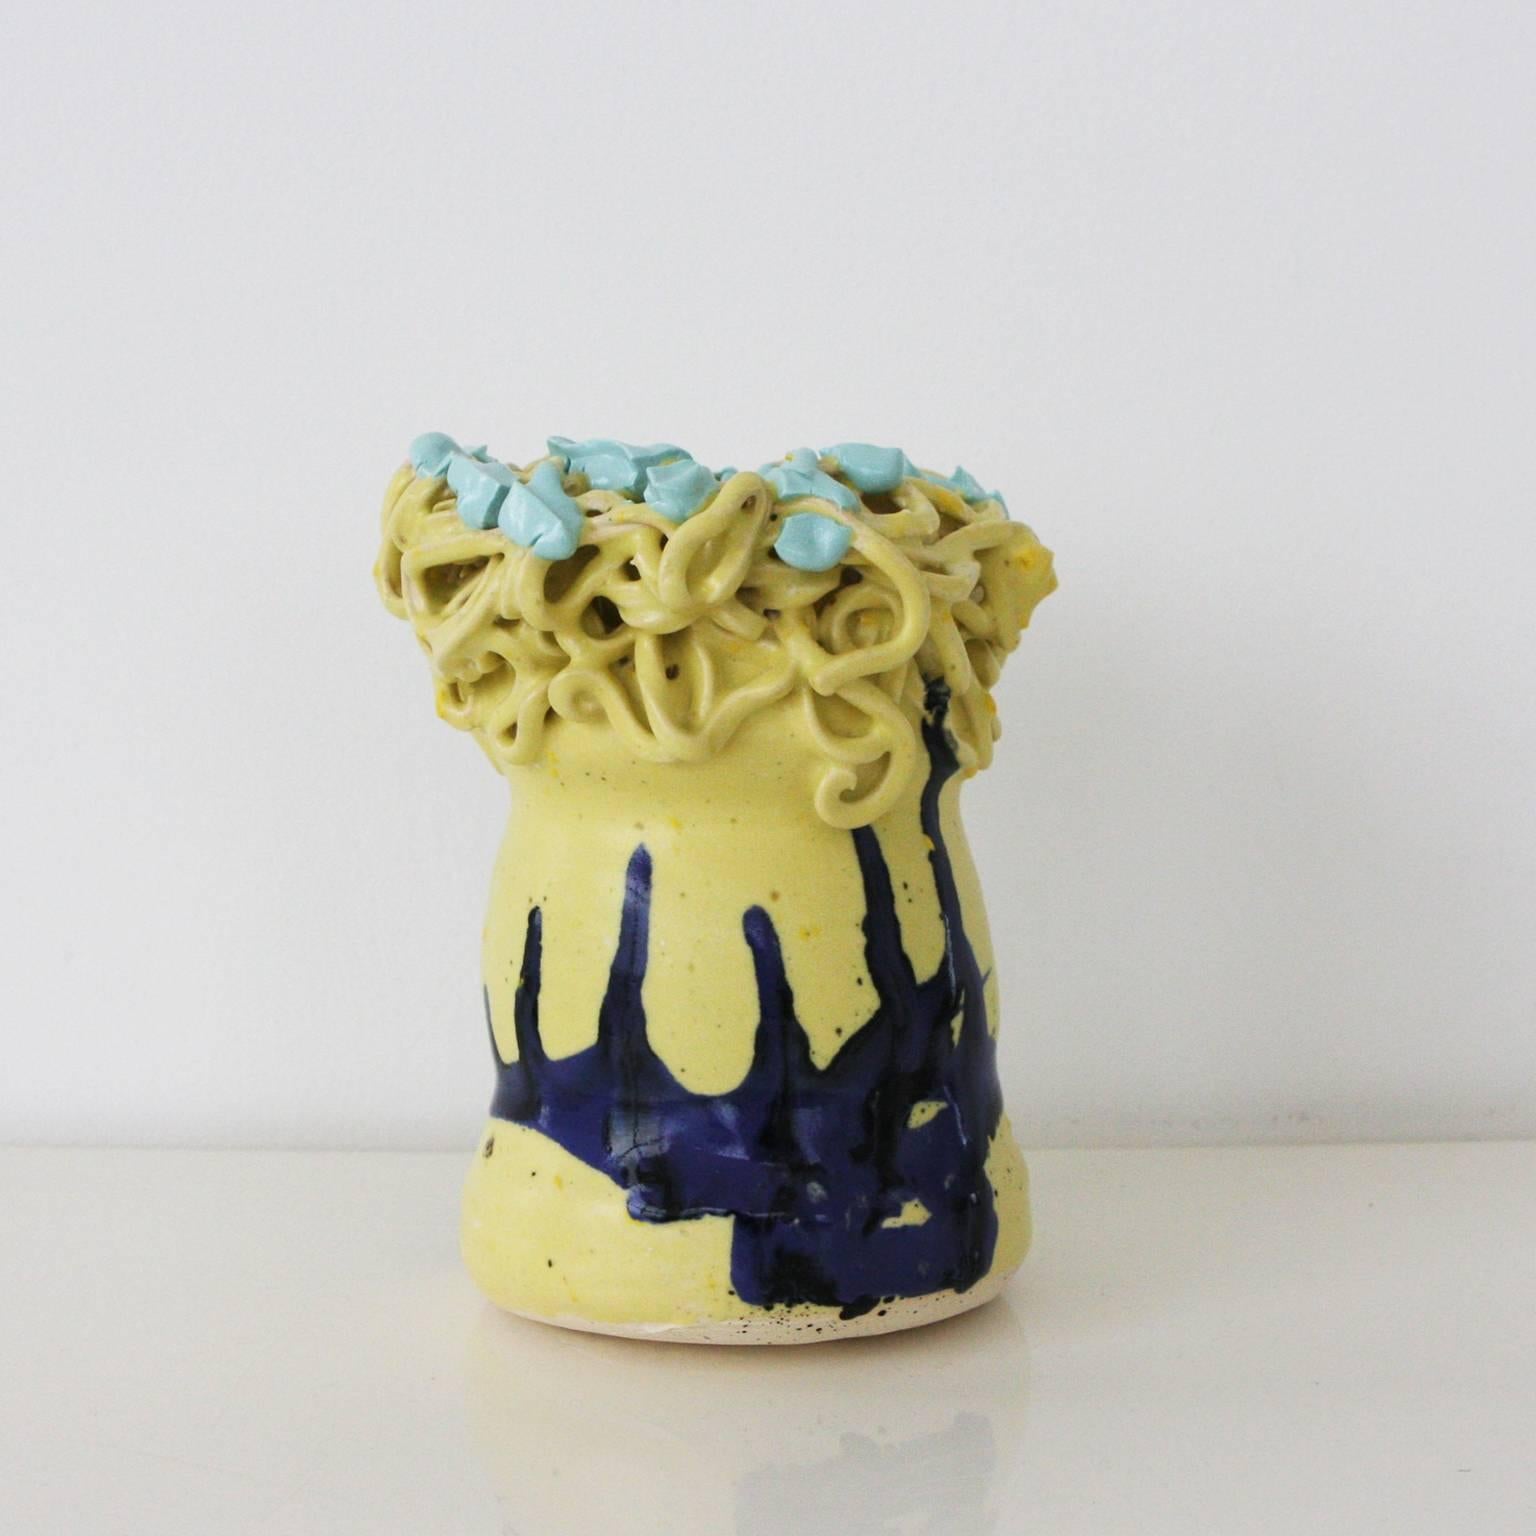 Unique ceramic vessel with multiple glazes by artist Manal Kara.